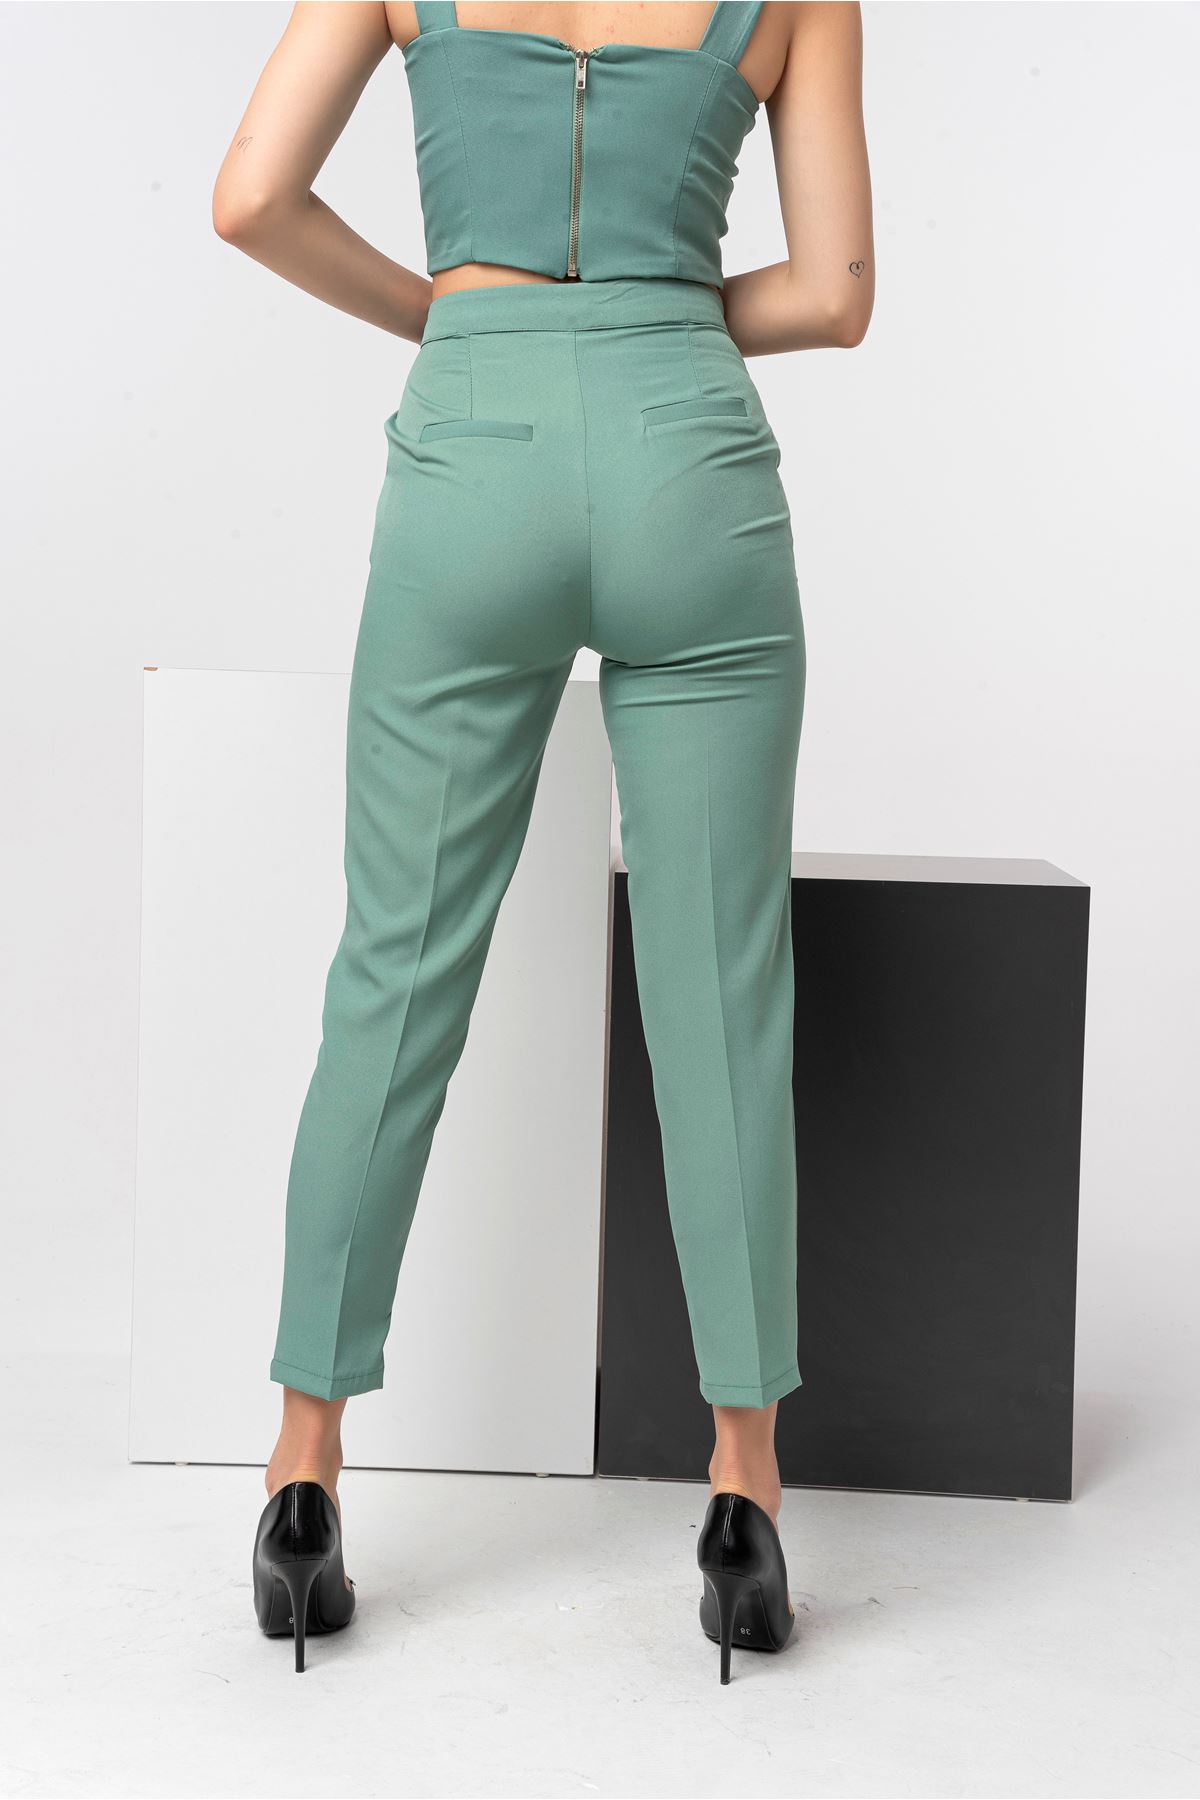 Atlas Fabric Classical Women'S Trouser - Mint